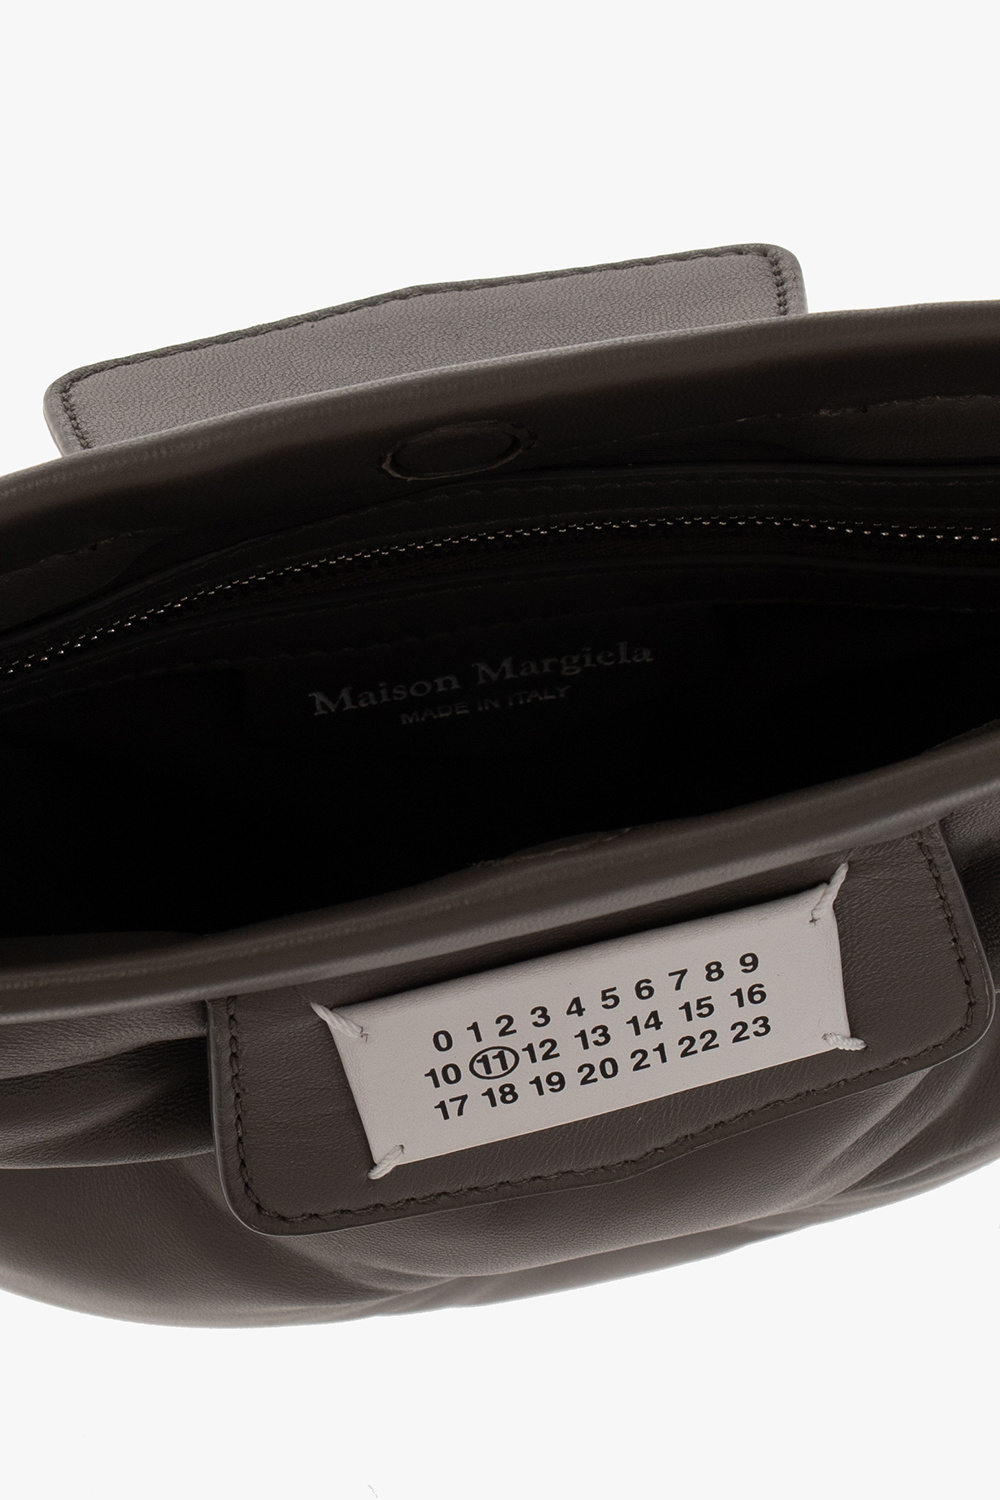 Maison Margiela Quilted shoulder bag | Men's Bags | Vitkac